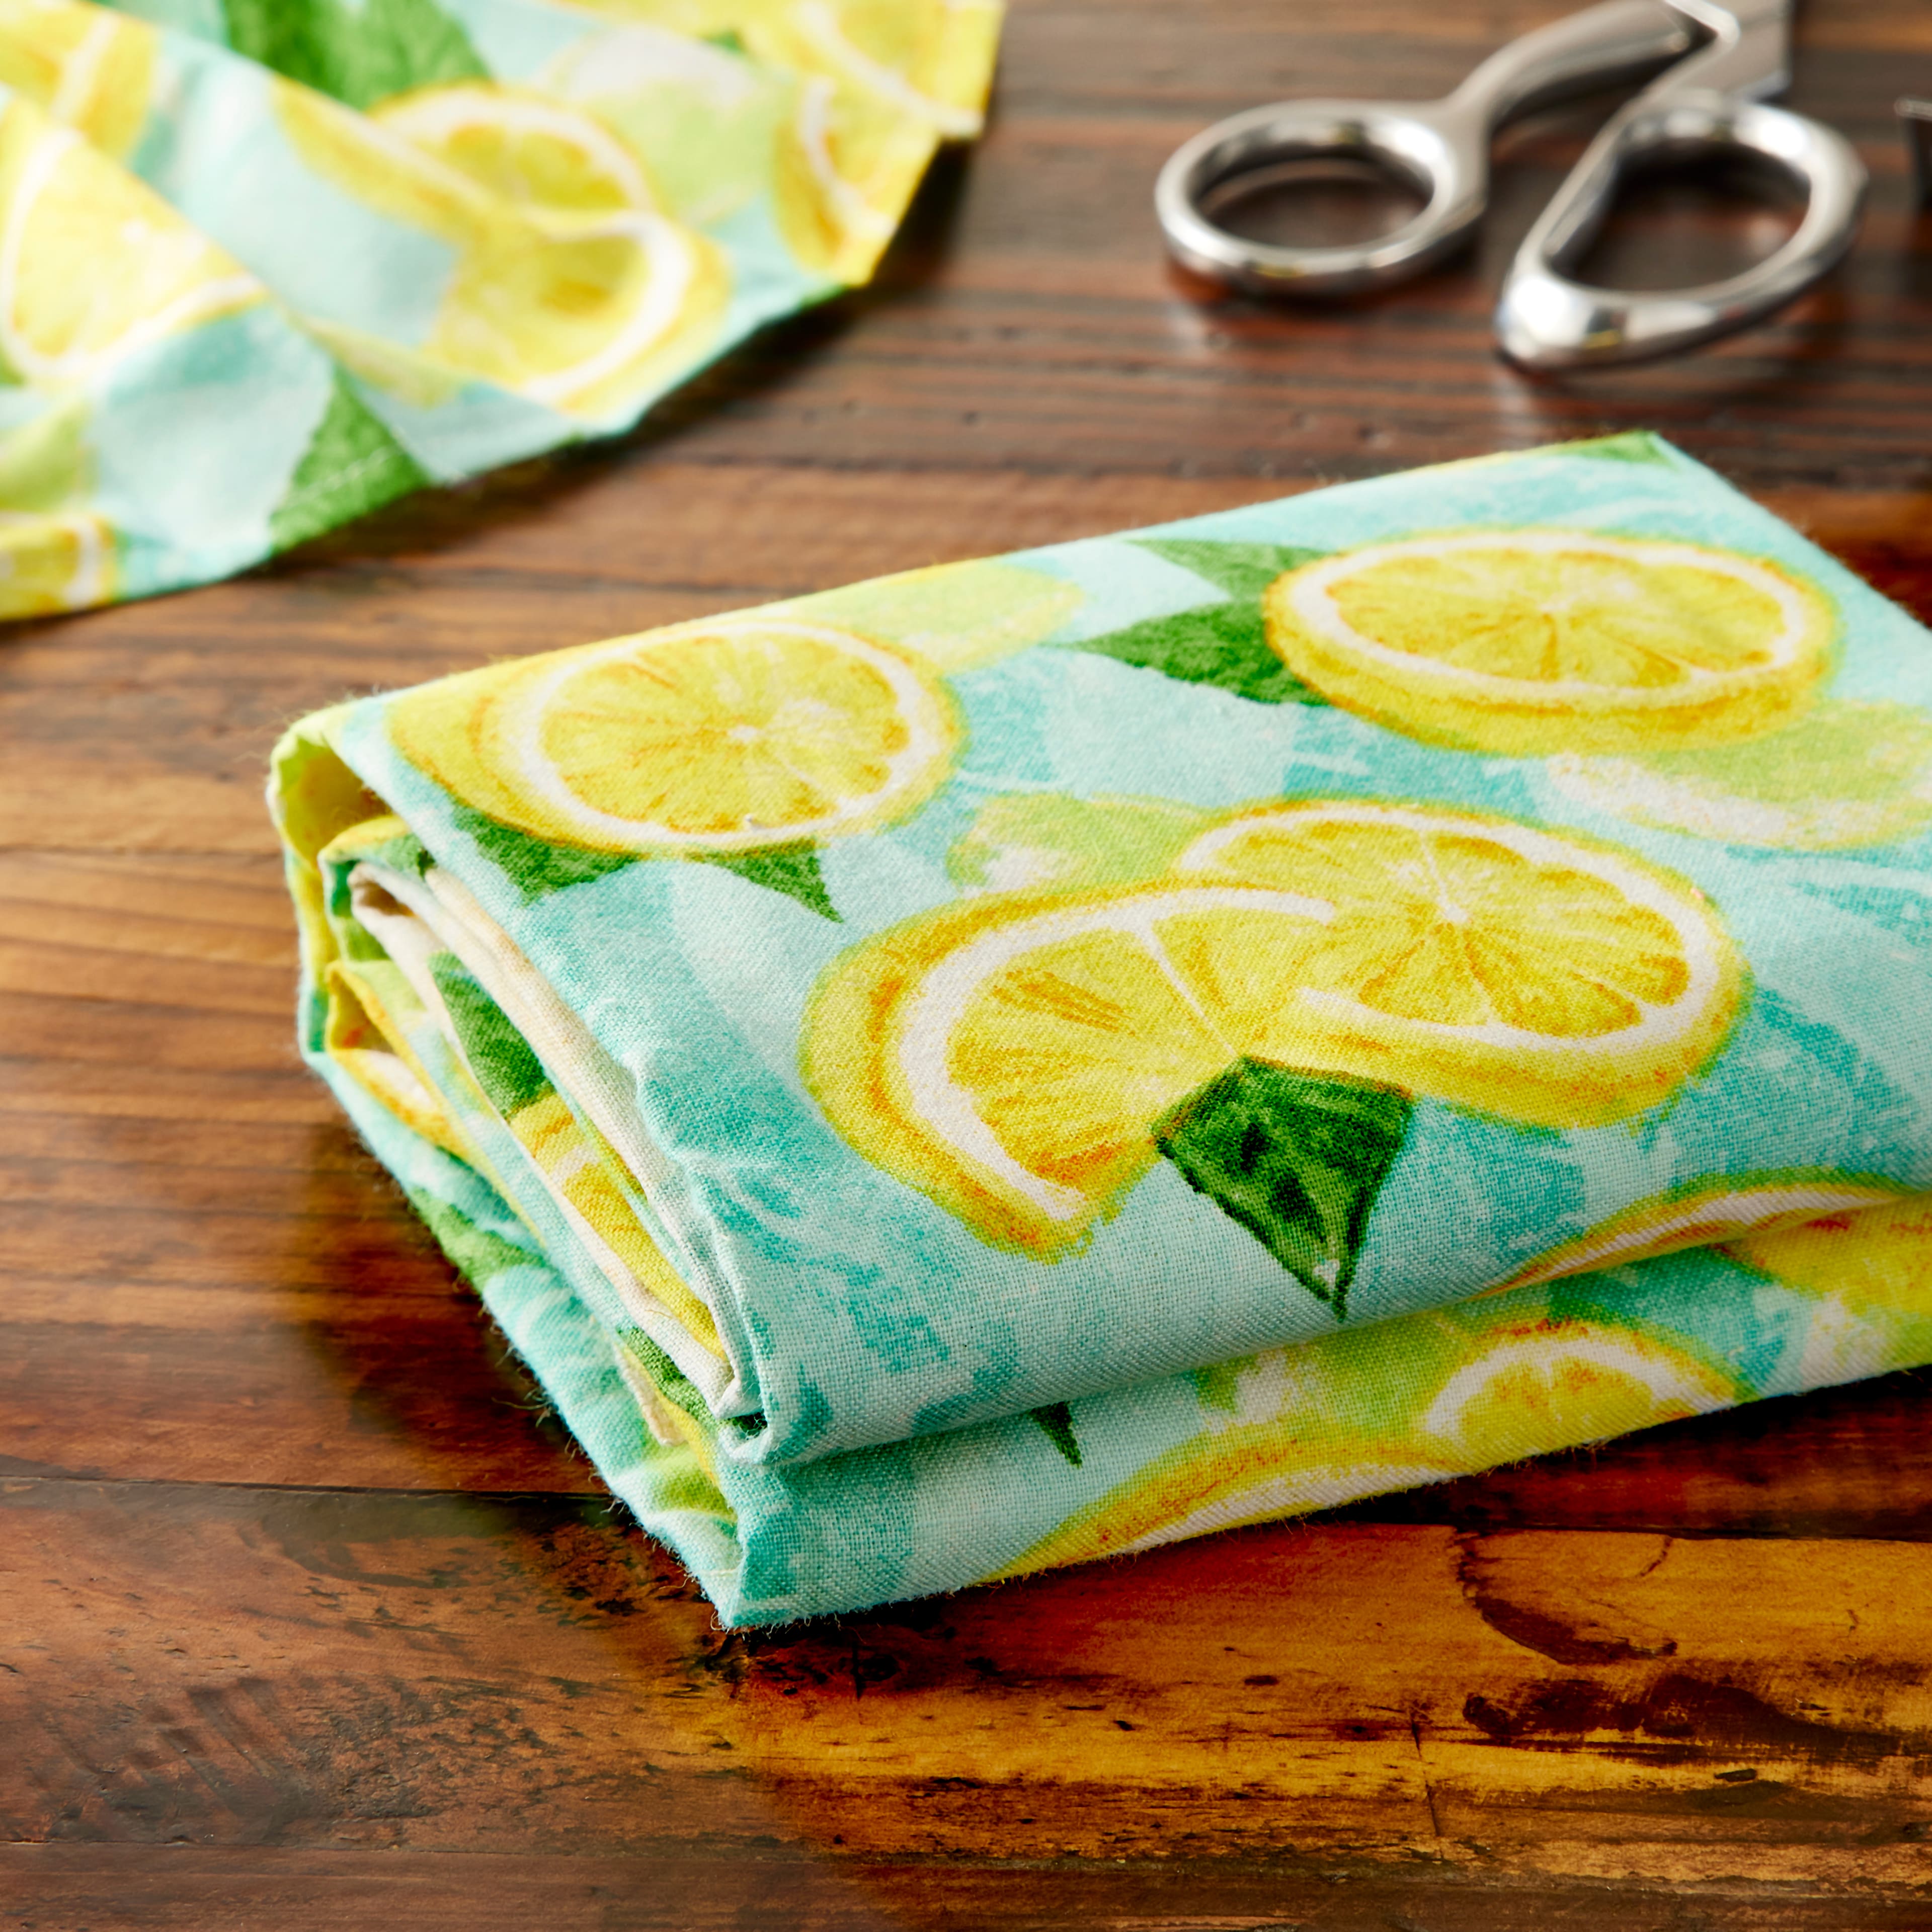 Blue &#x26; Yellow Lemon Cotton Fabric Bundle by Loops &#x26; Threads&#x2122;